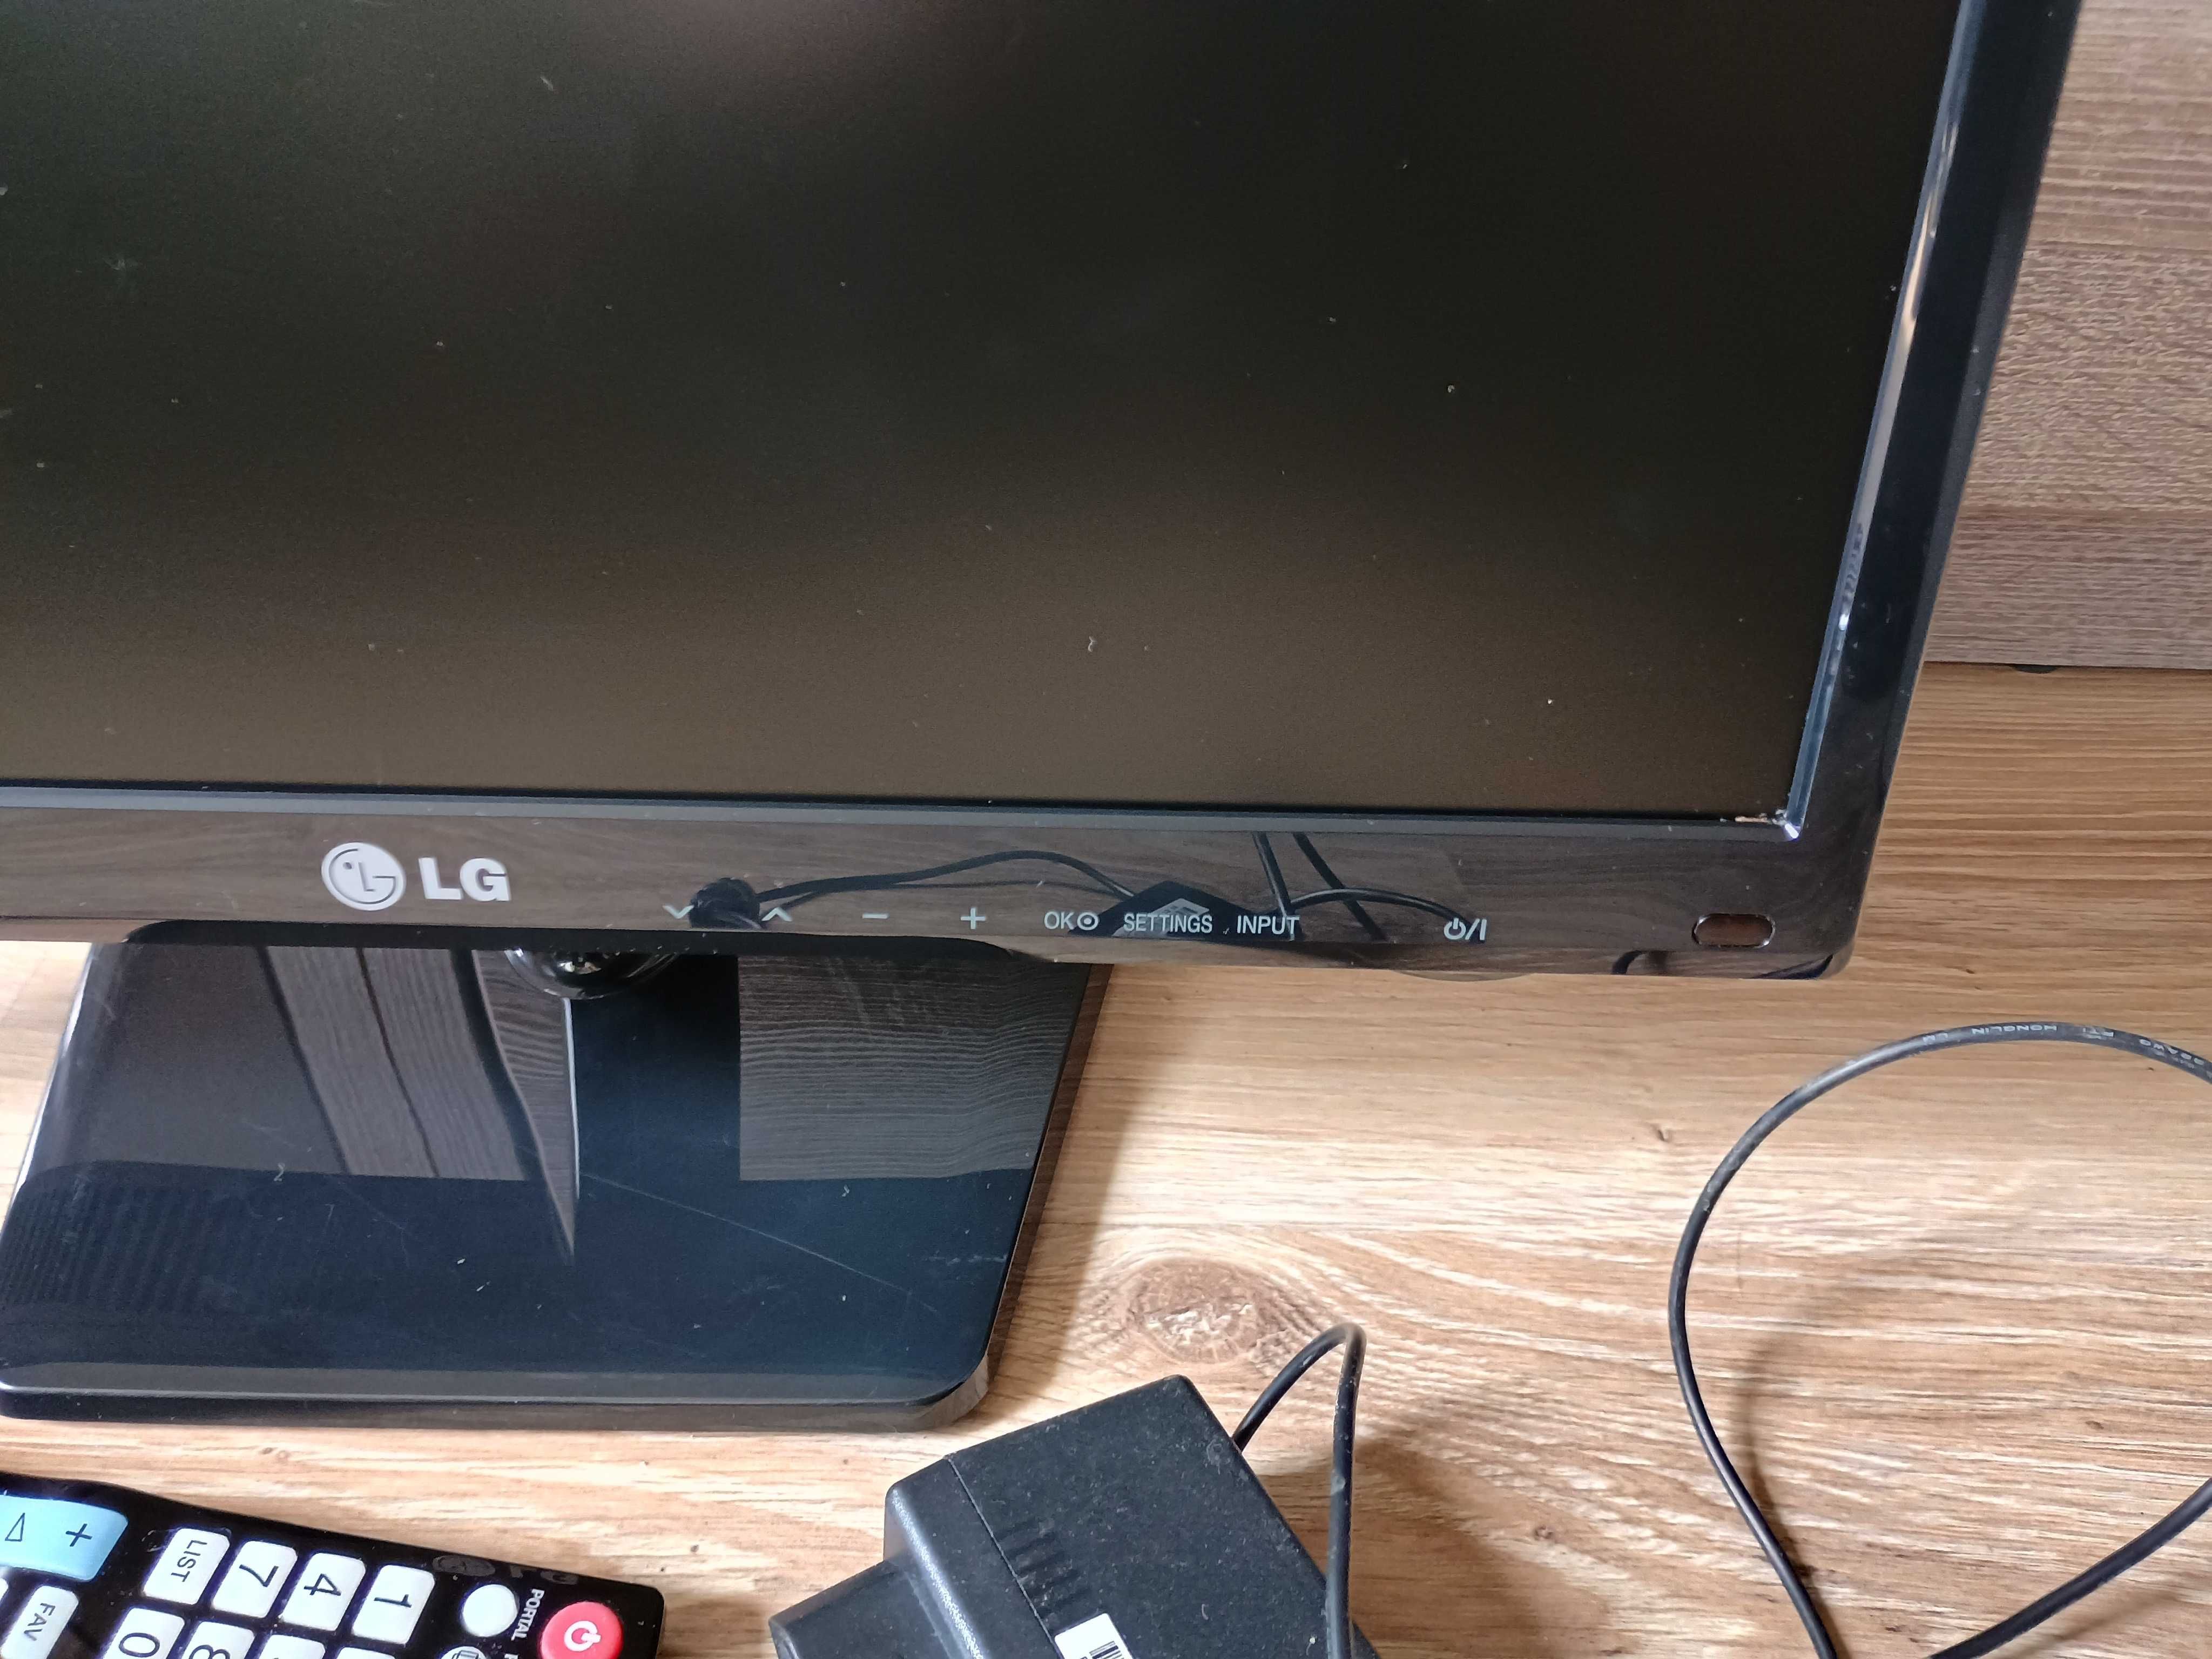 LG M1931D-PZ+tv+pilot/HDMI 19 cali